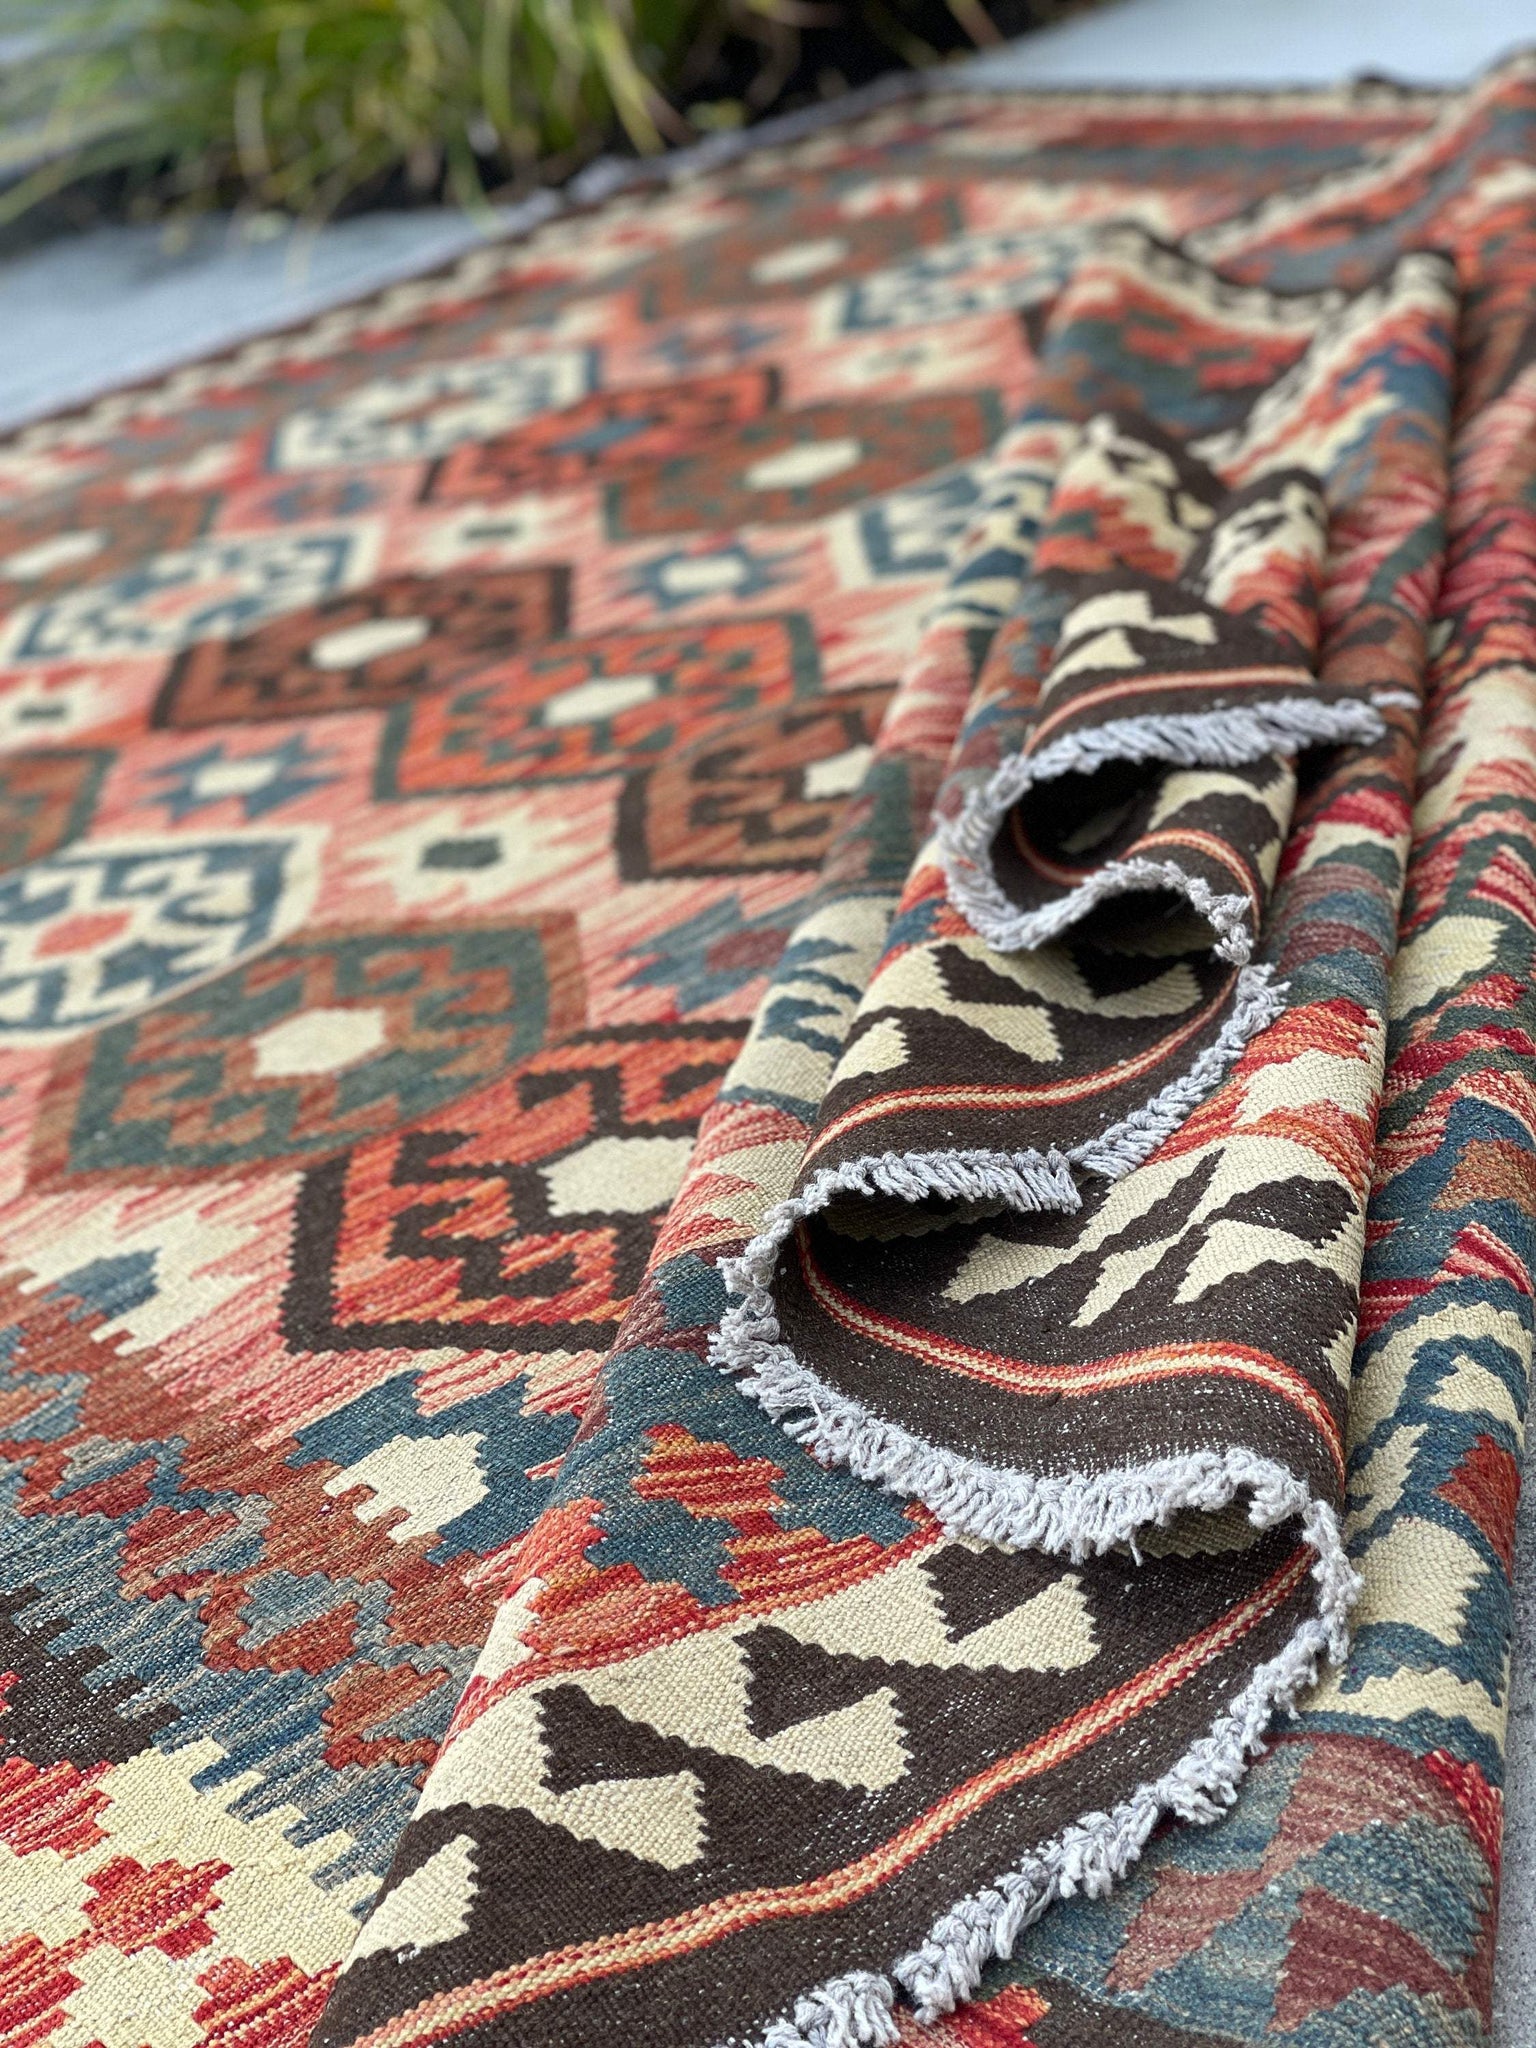 7x10 (215x305) Handmade Afghan Kilim Flatweave Rug | Red Blue Brown | Boho Tribal Moroccan Outdoor Wool Knotted Woven Jute Turkish